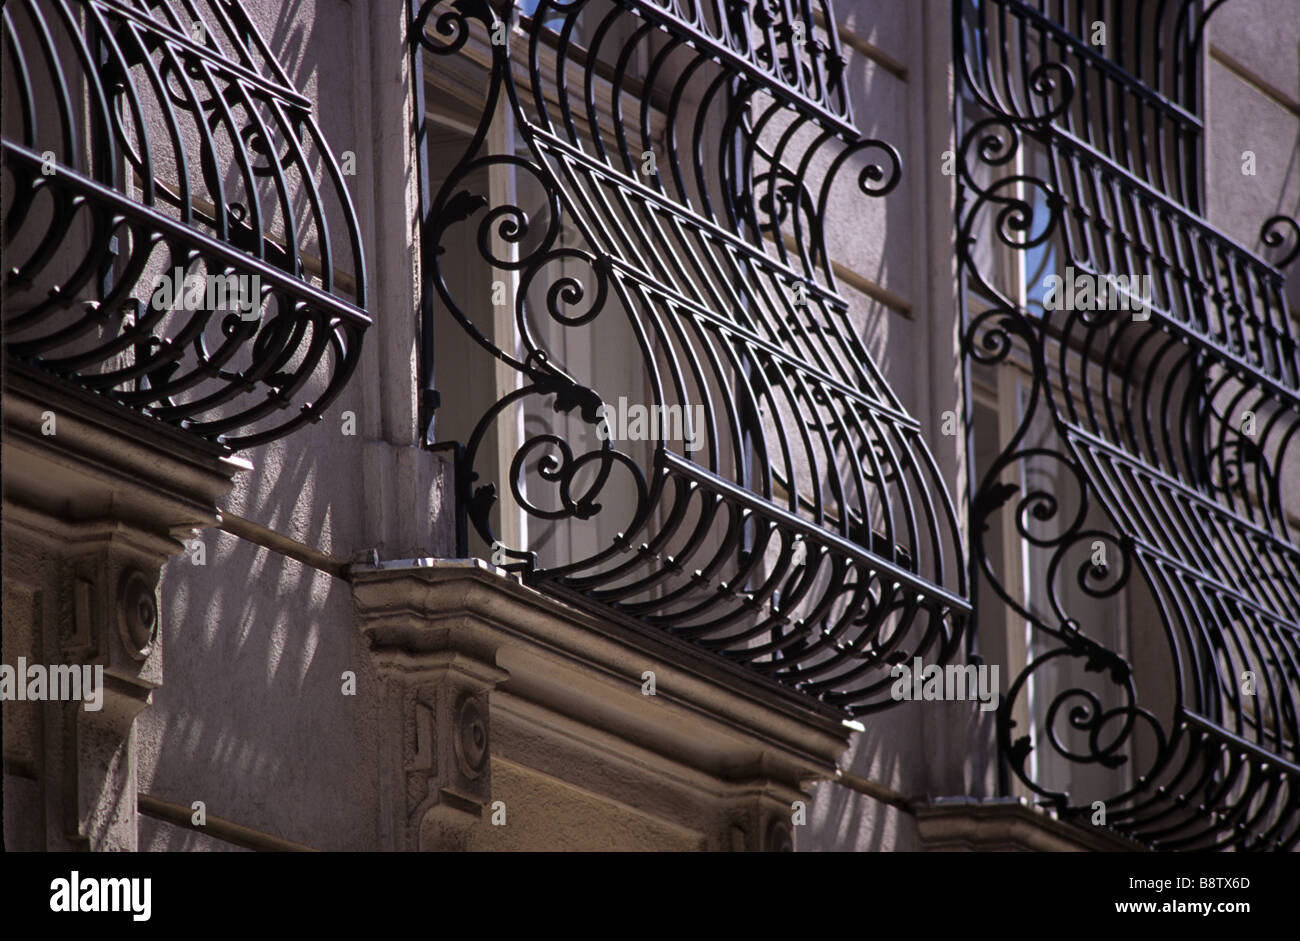 Ornate Scroll Design Wrought Iron Window Grills, Vienna, Austria Stock  Photo - Alamy